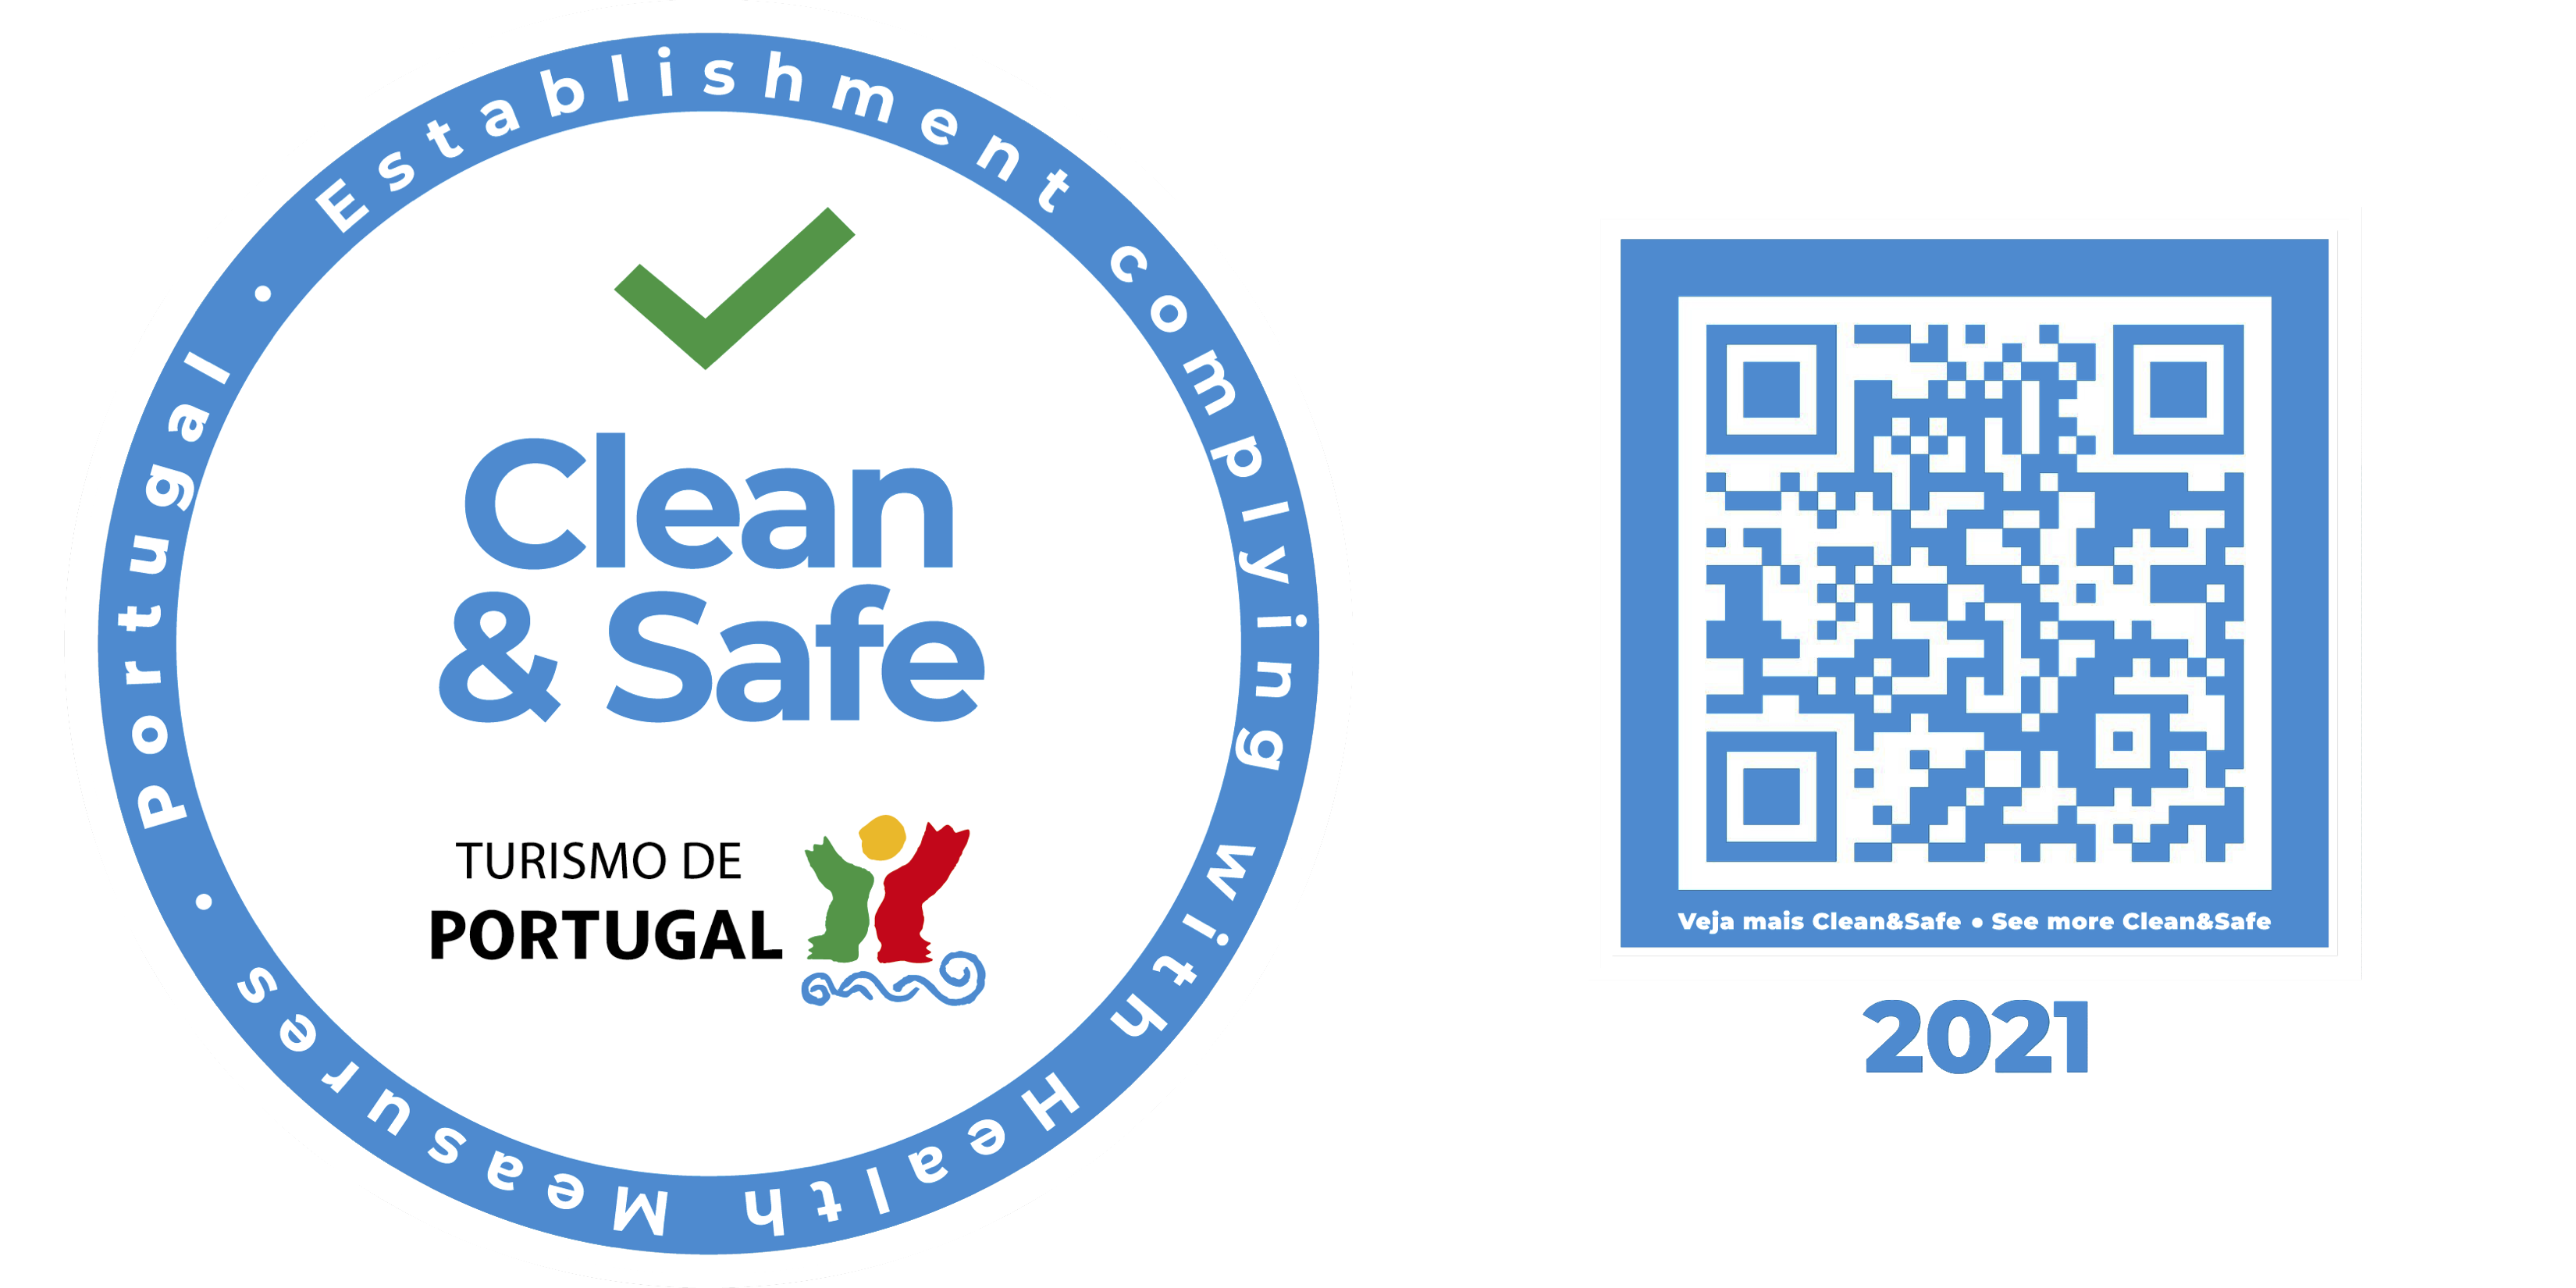 Turismo de Portugal clean and safe logo